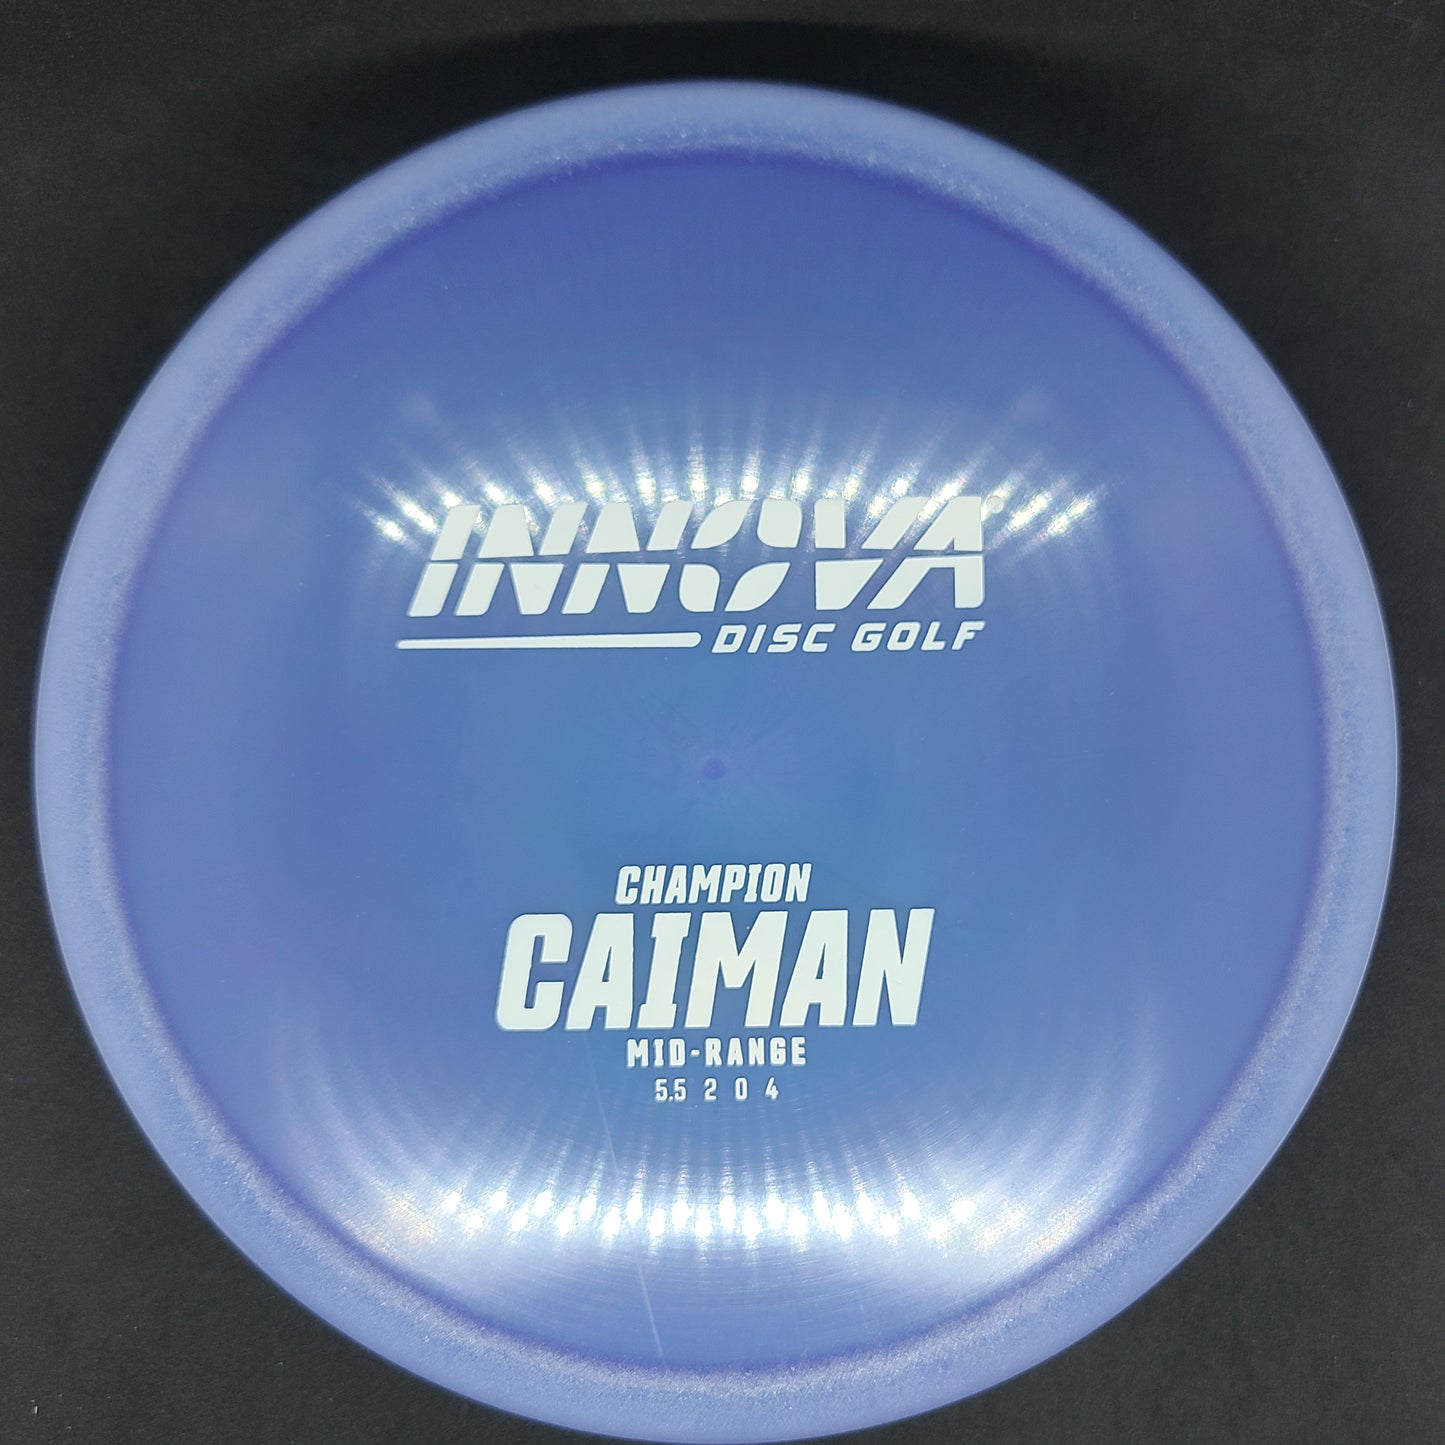 Innova - Caiman - Champion